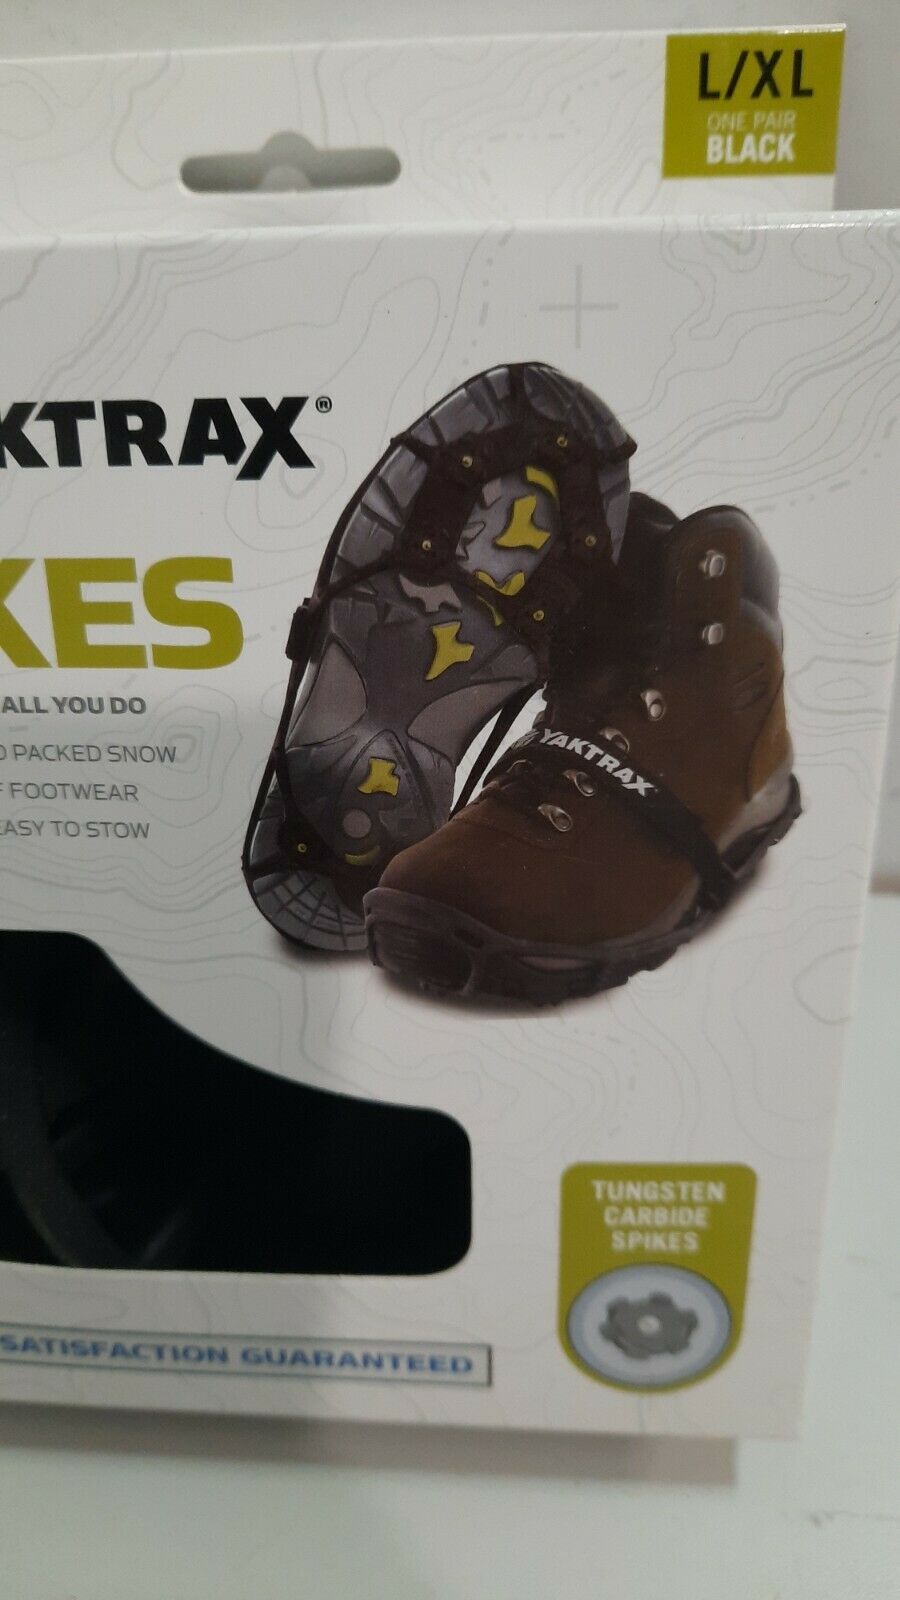 Yaktrax Spikes Ice Cleats Size L/XL